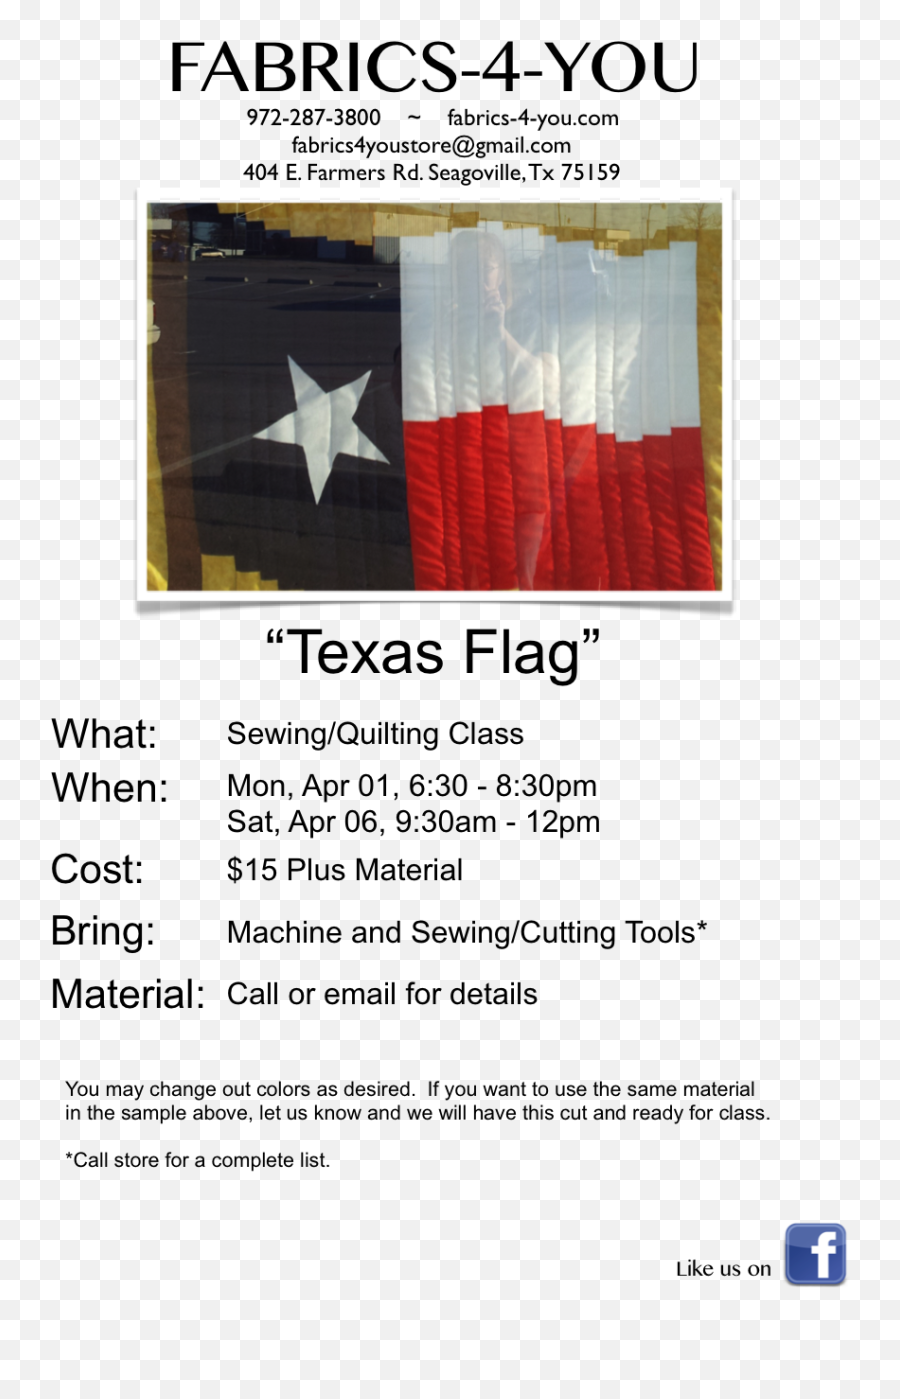 Download Texas Flag Flyer - Flyer Full Size Png Image Pngkit Flyer,Texas Flag Png